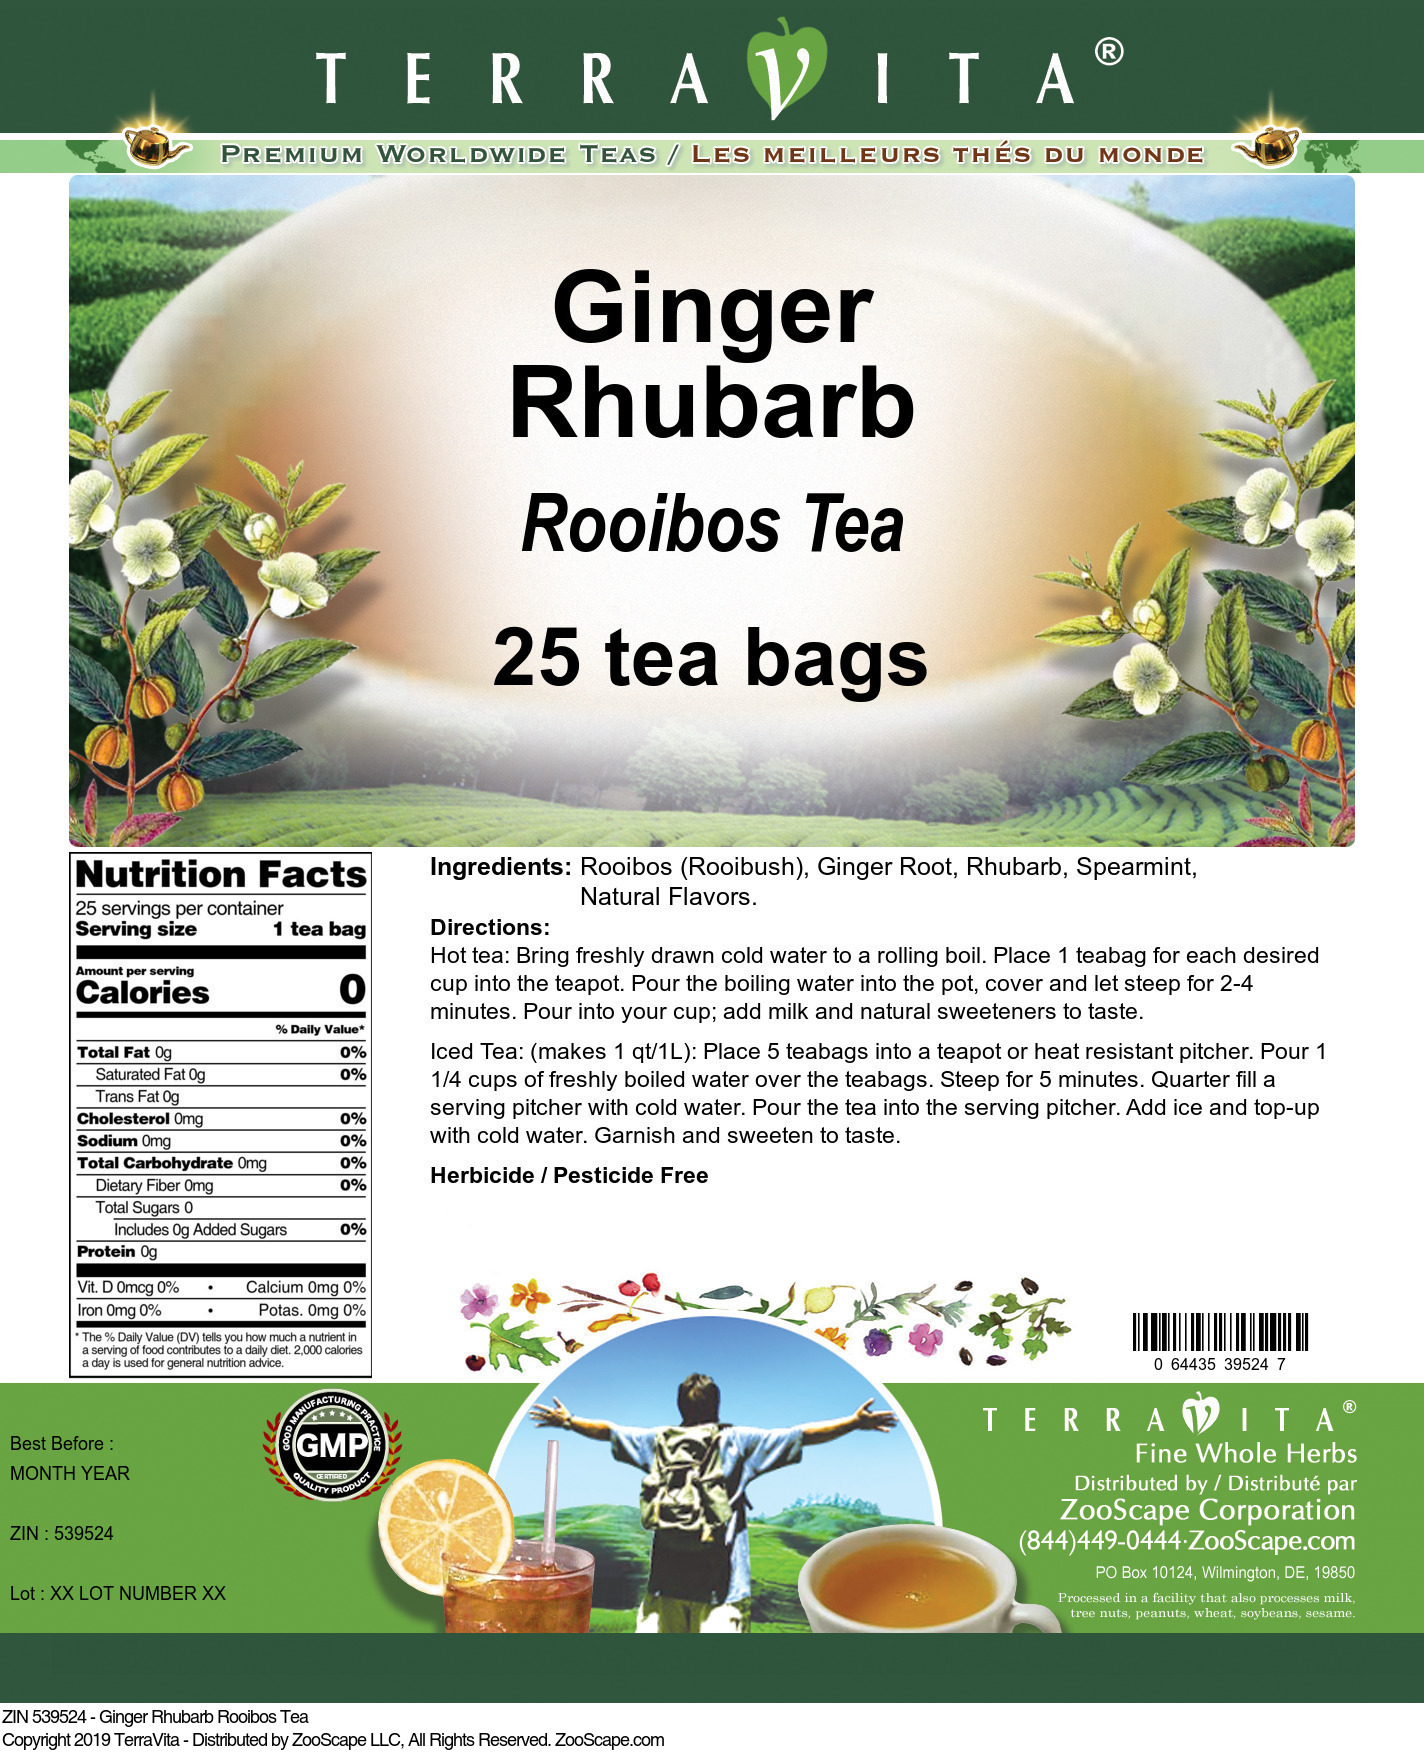 Ginger Rhubarb Rooibos Tea - Label